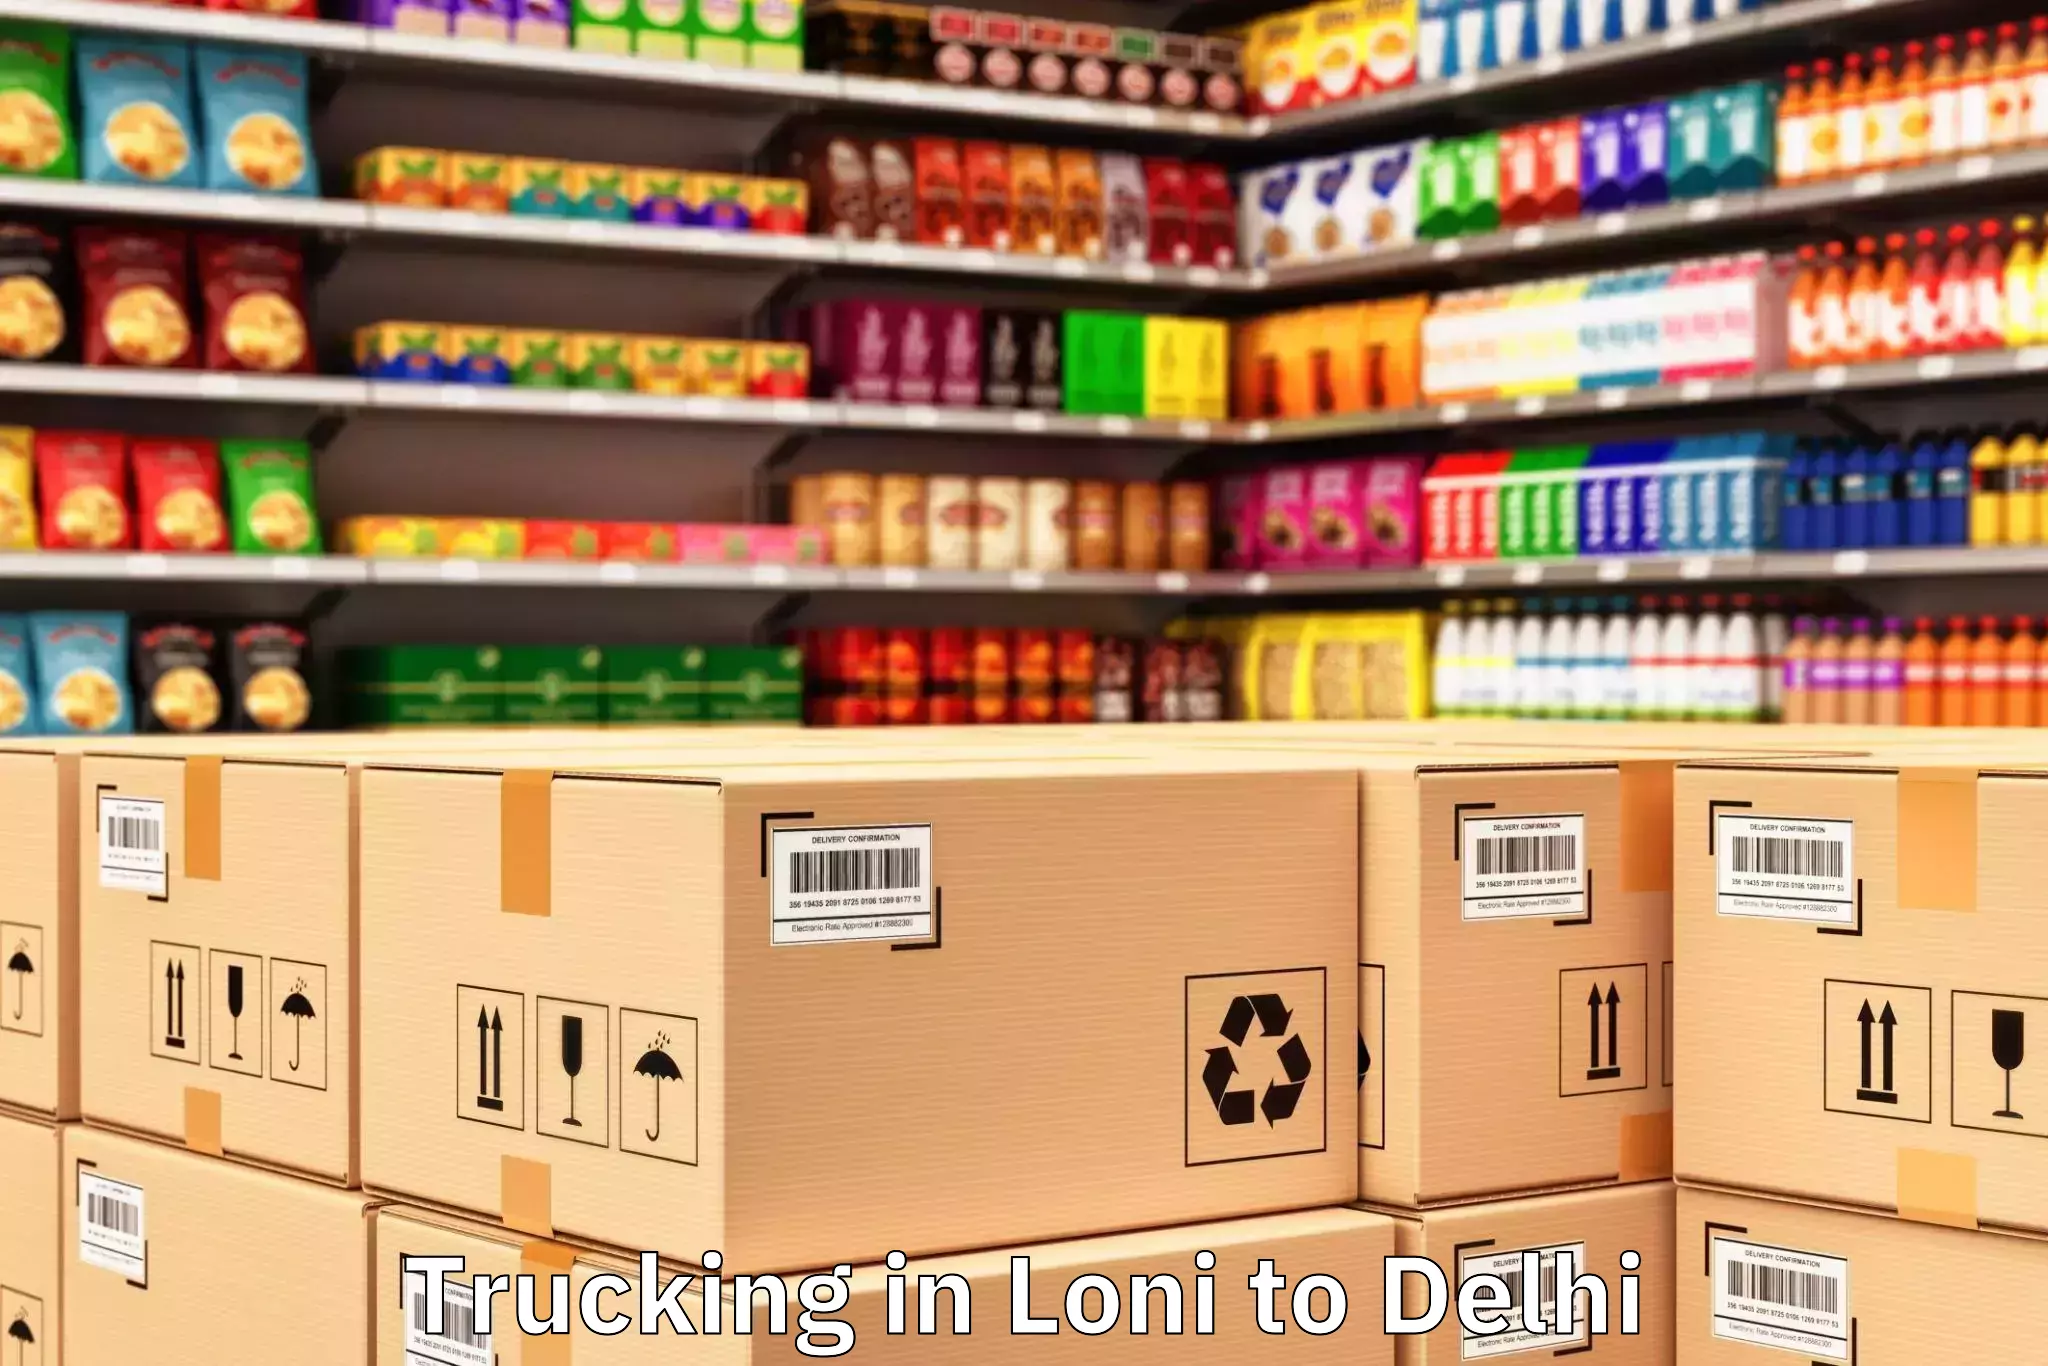 Trusted Loni to Mgf Metropolitan Mall Delhi Trucking